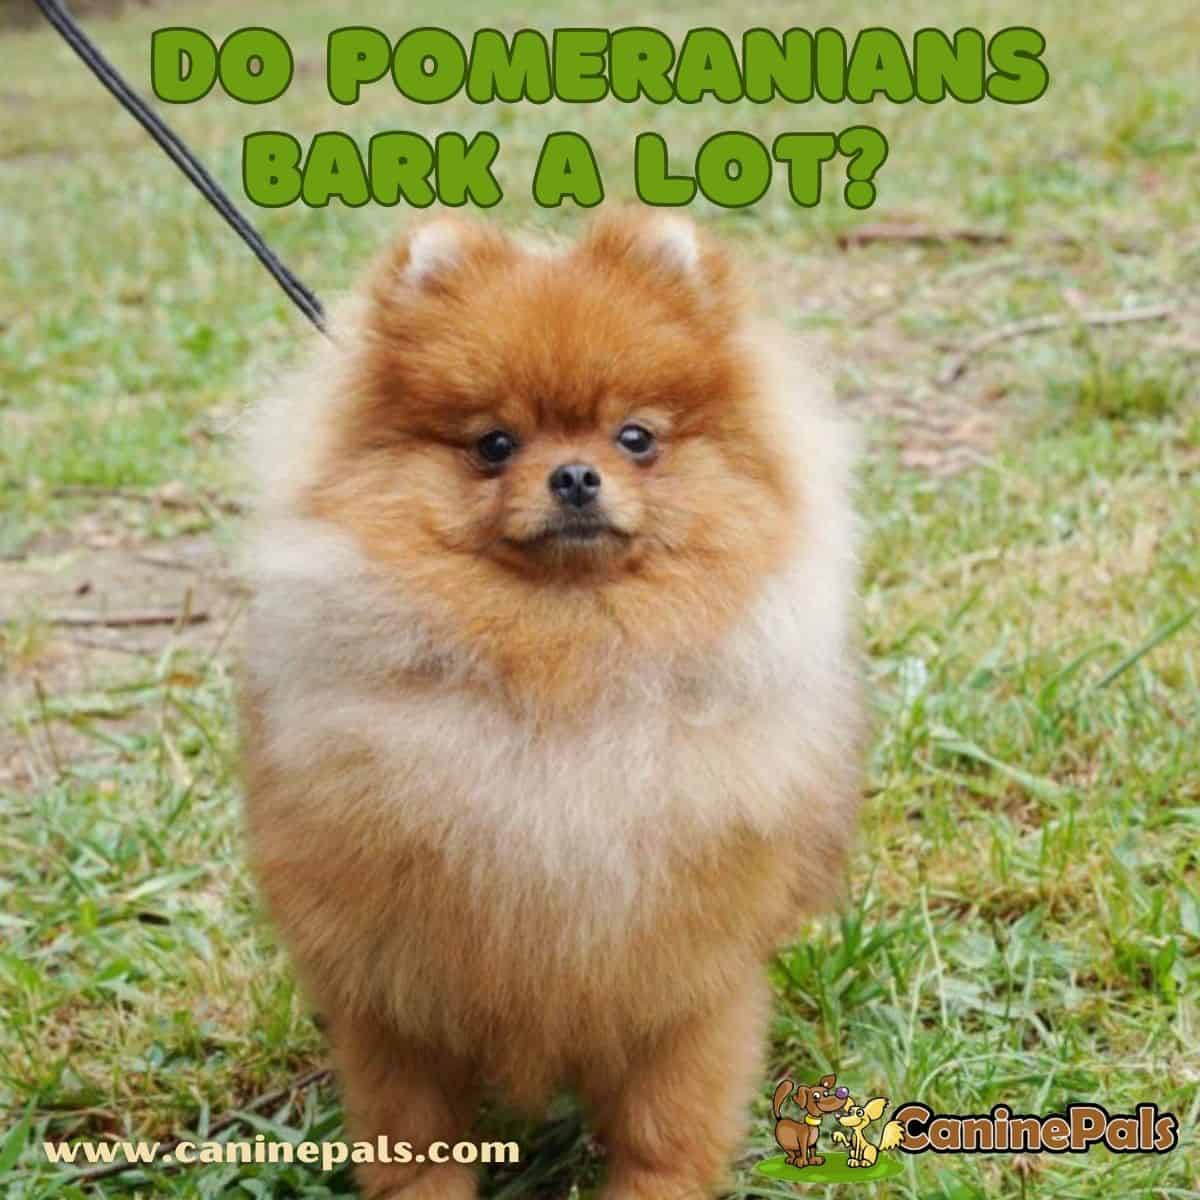 Do Pomeranians Bark a Lot?